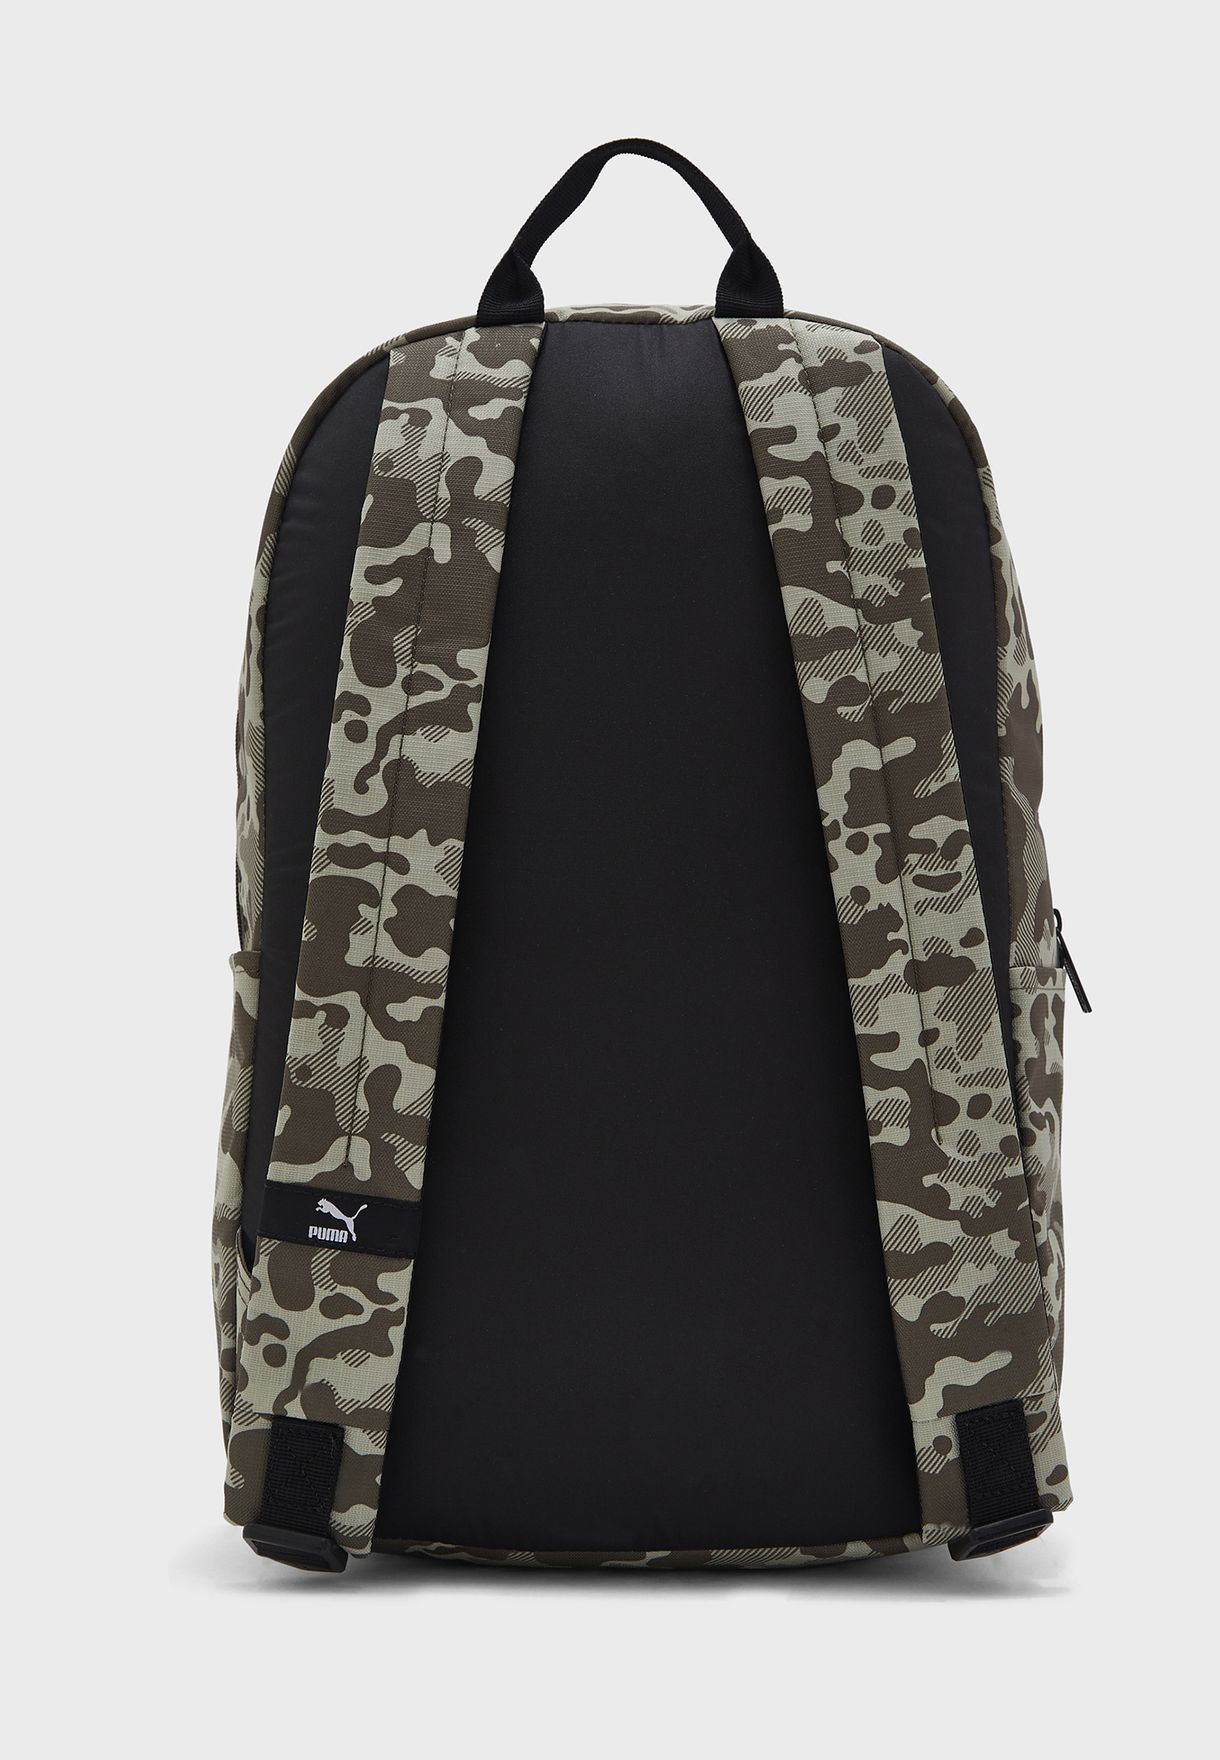 Originals Urban Backpack